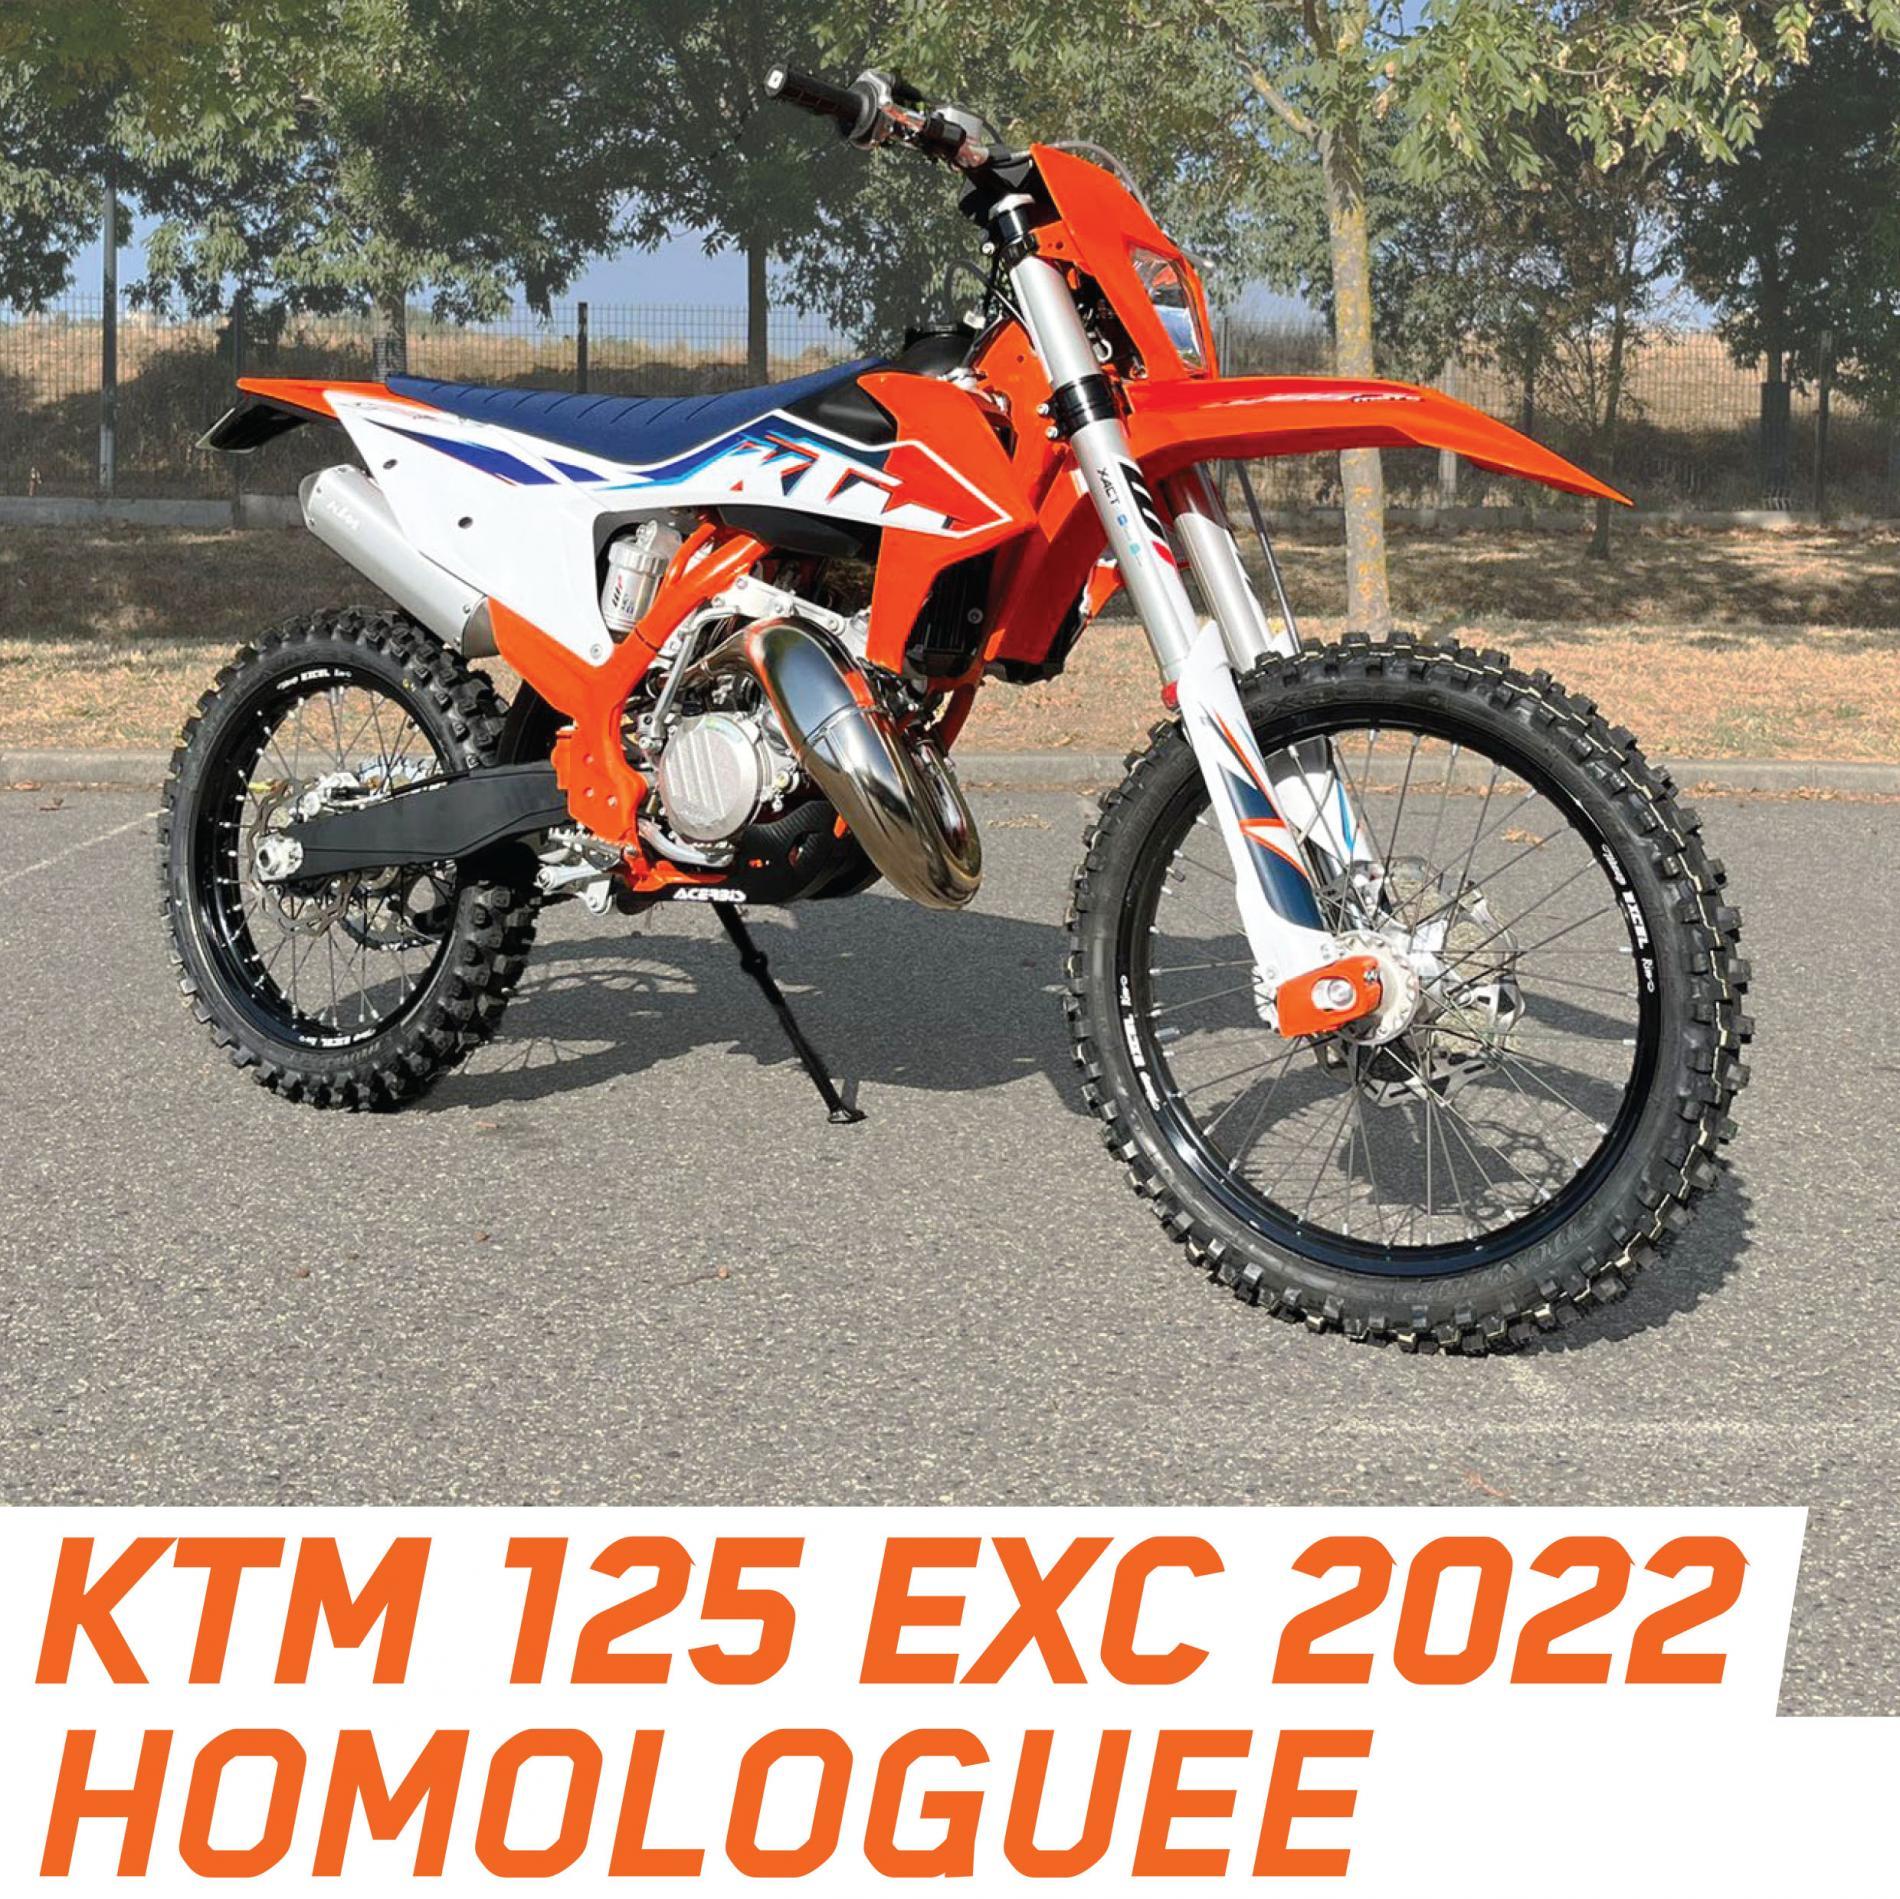 KTM 125 EXC 2022 Homologuée